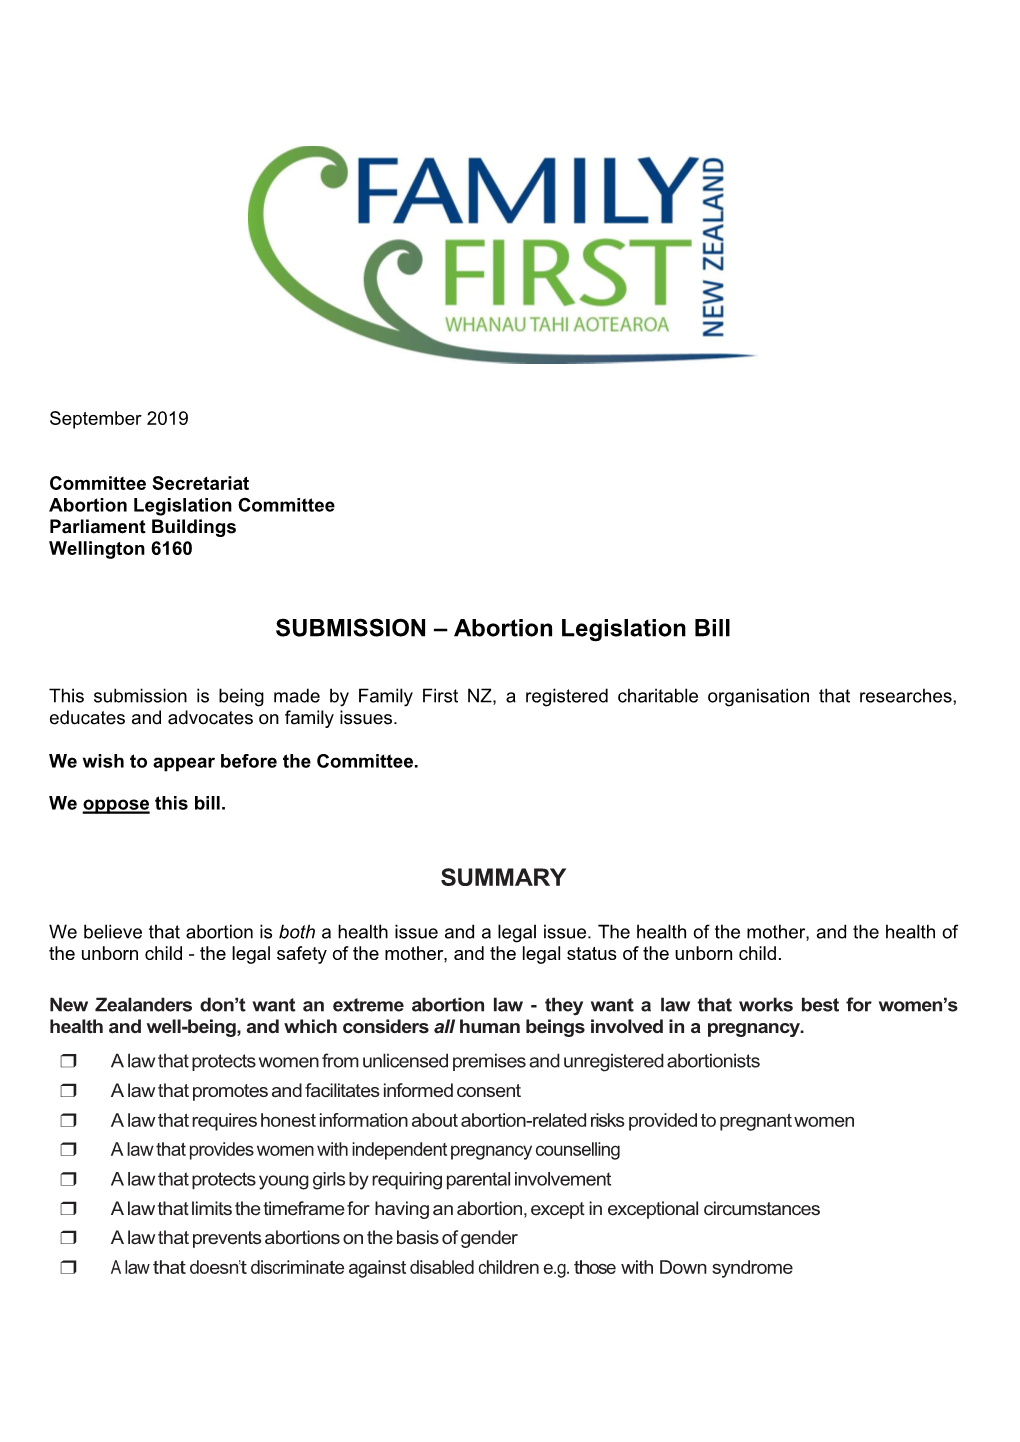 SUBMISSION – Abortion Legislation Bill SUMMARY